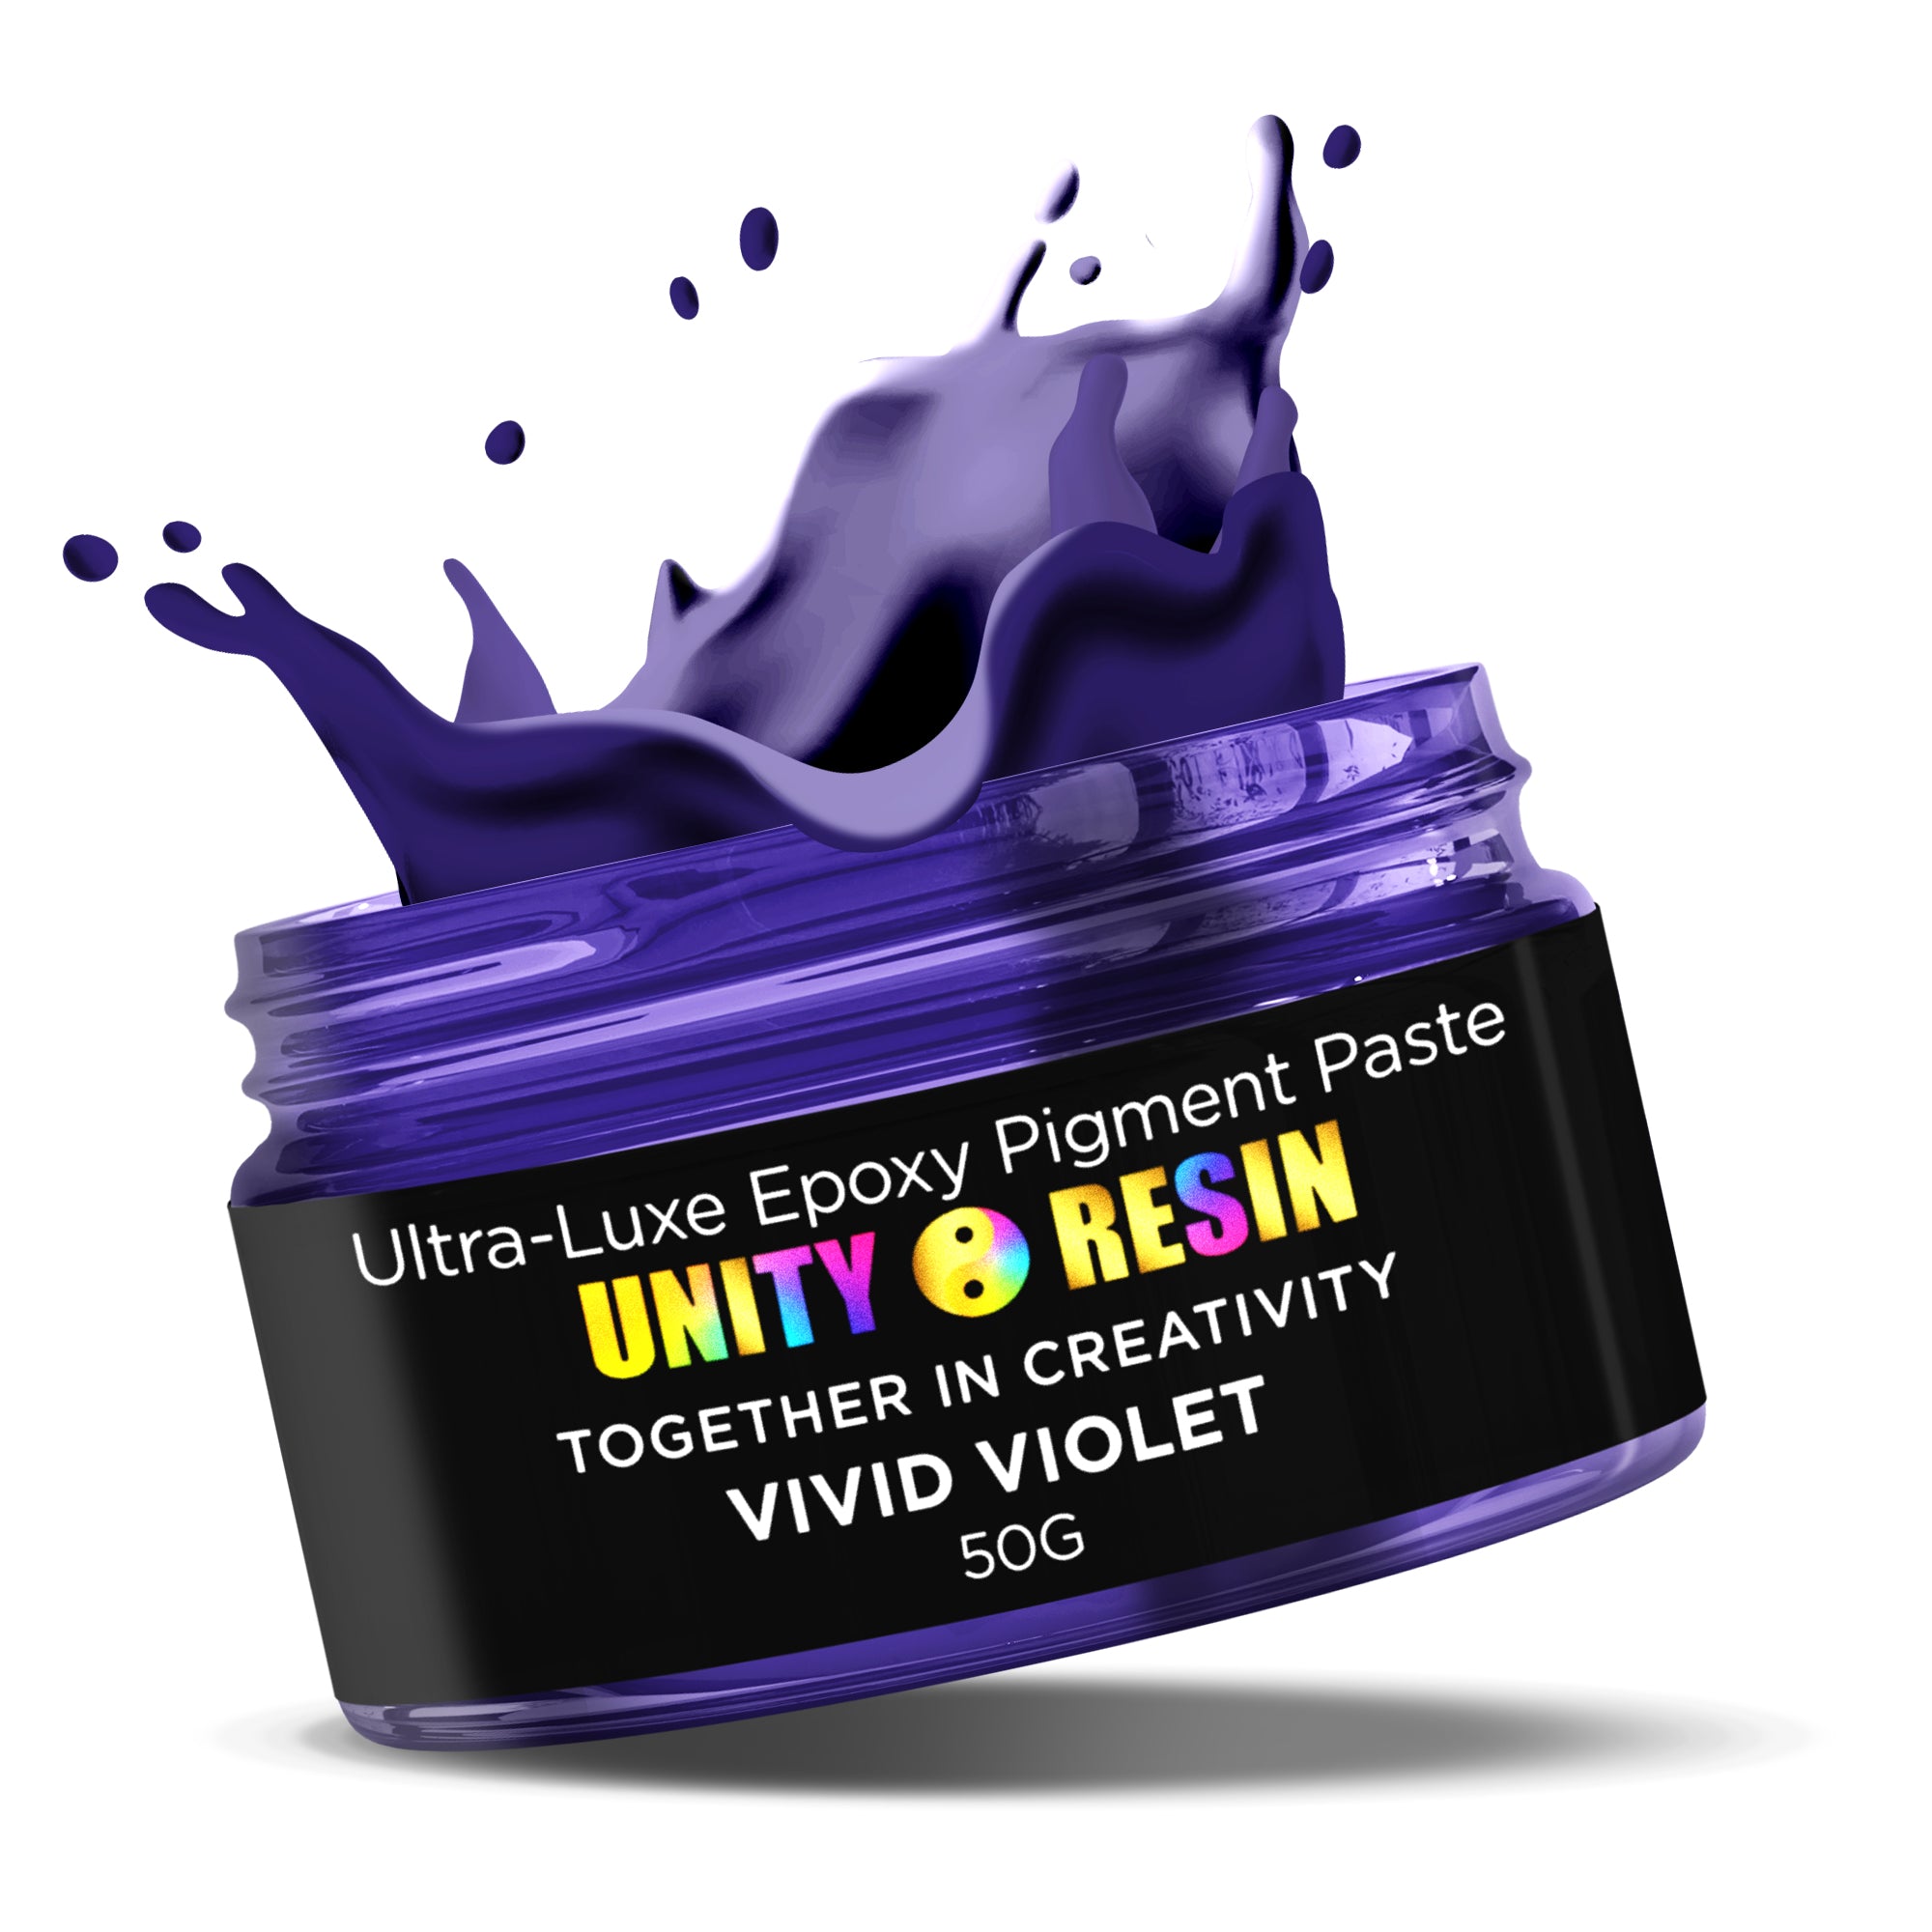 Ultra-Luxe Epoxy Resin Pigment Paste-VIVID VIOLET (50G)